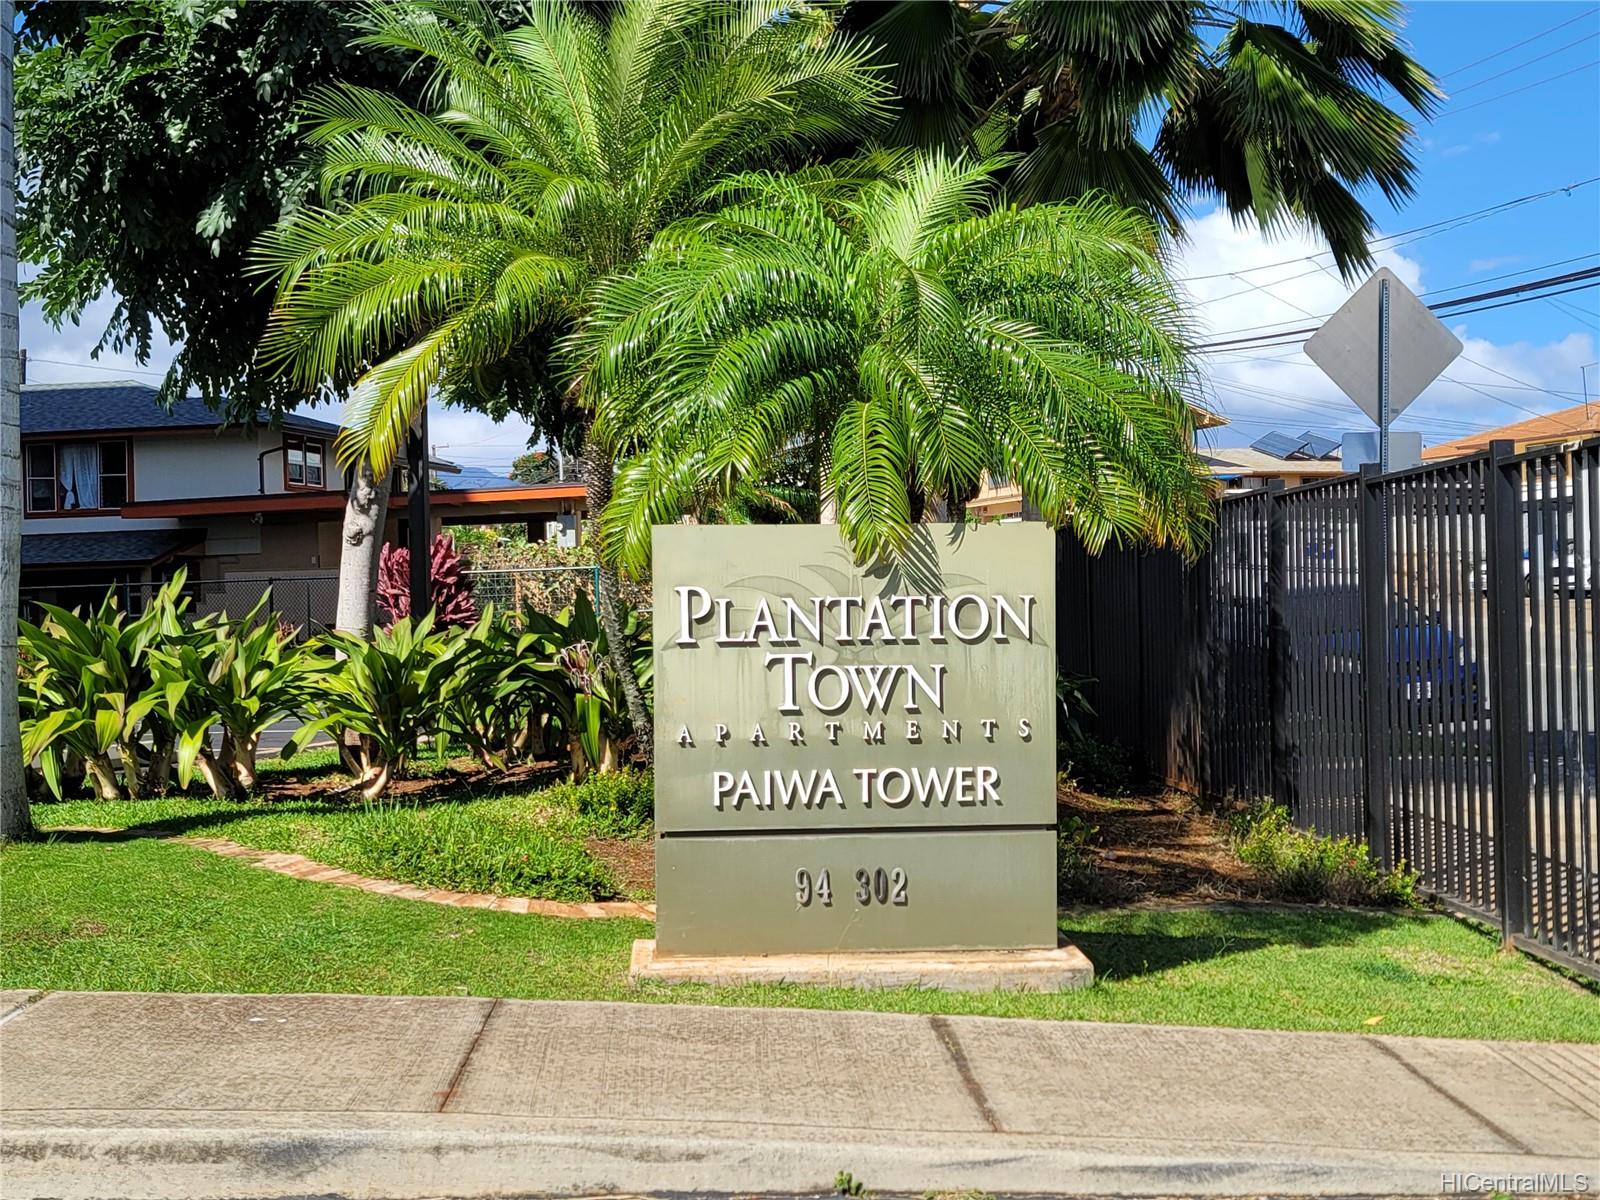 Plantation Town Apartments 94-302 Paiwa Street  Unit 112